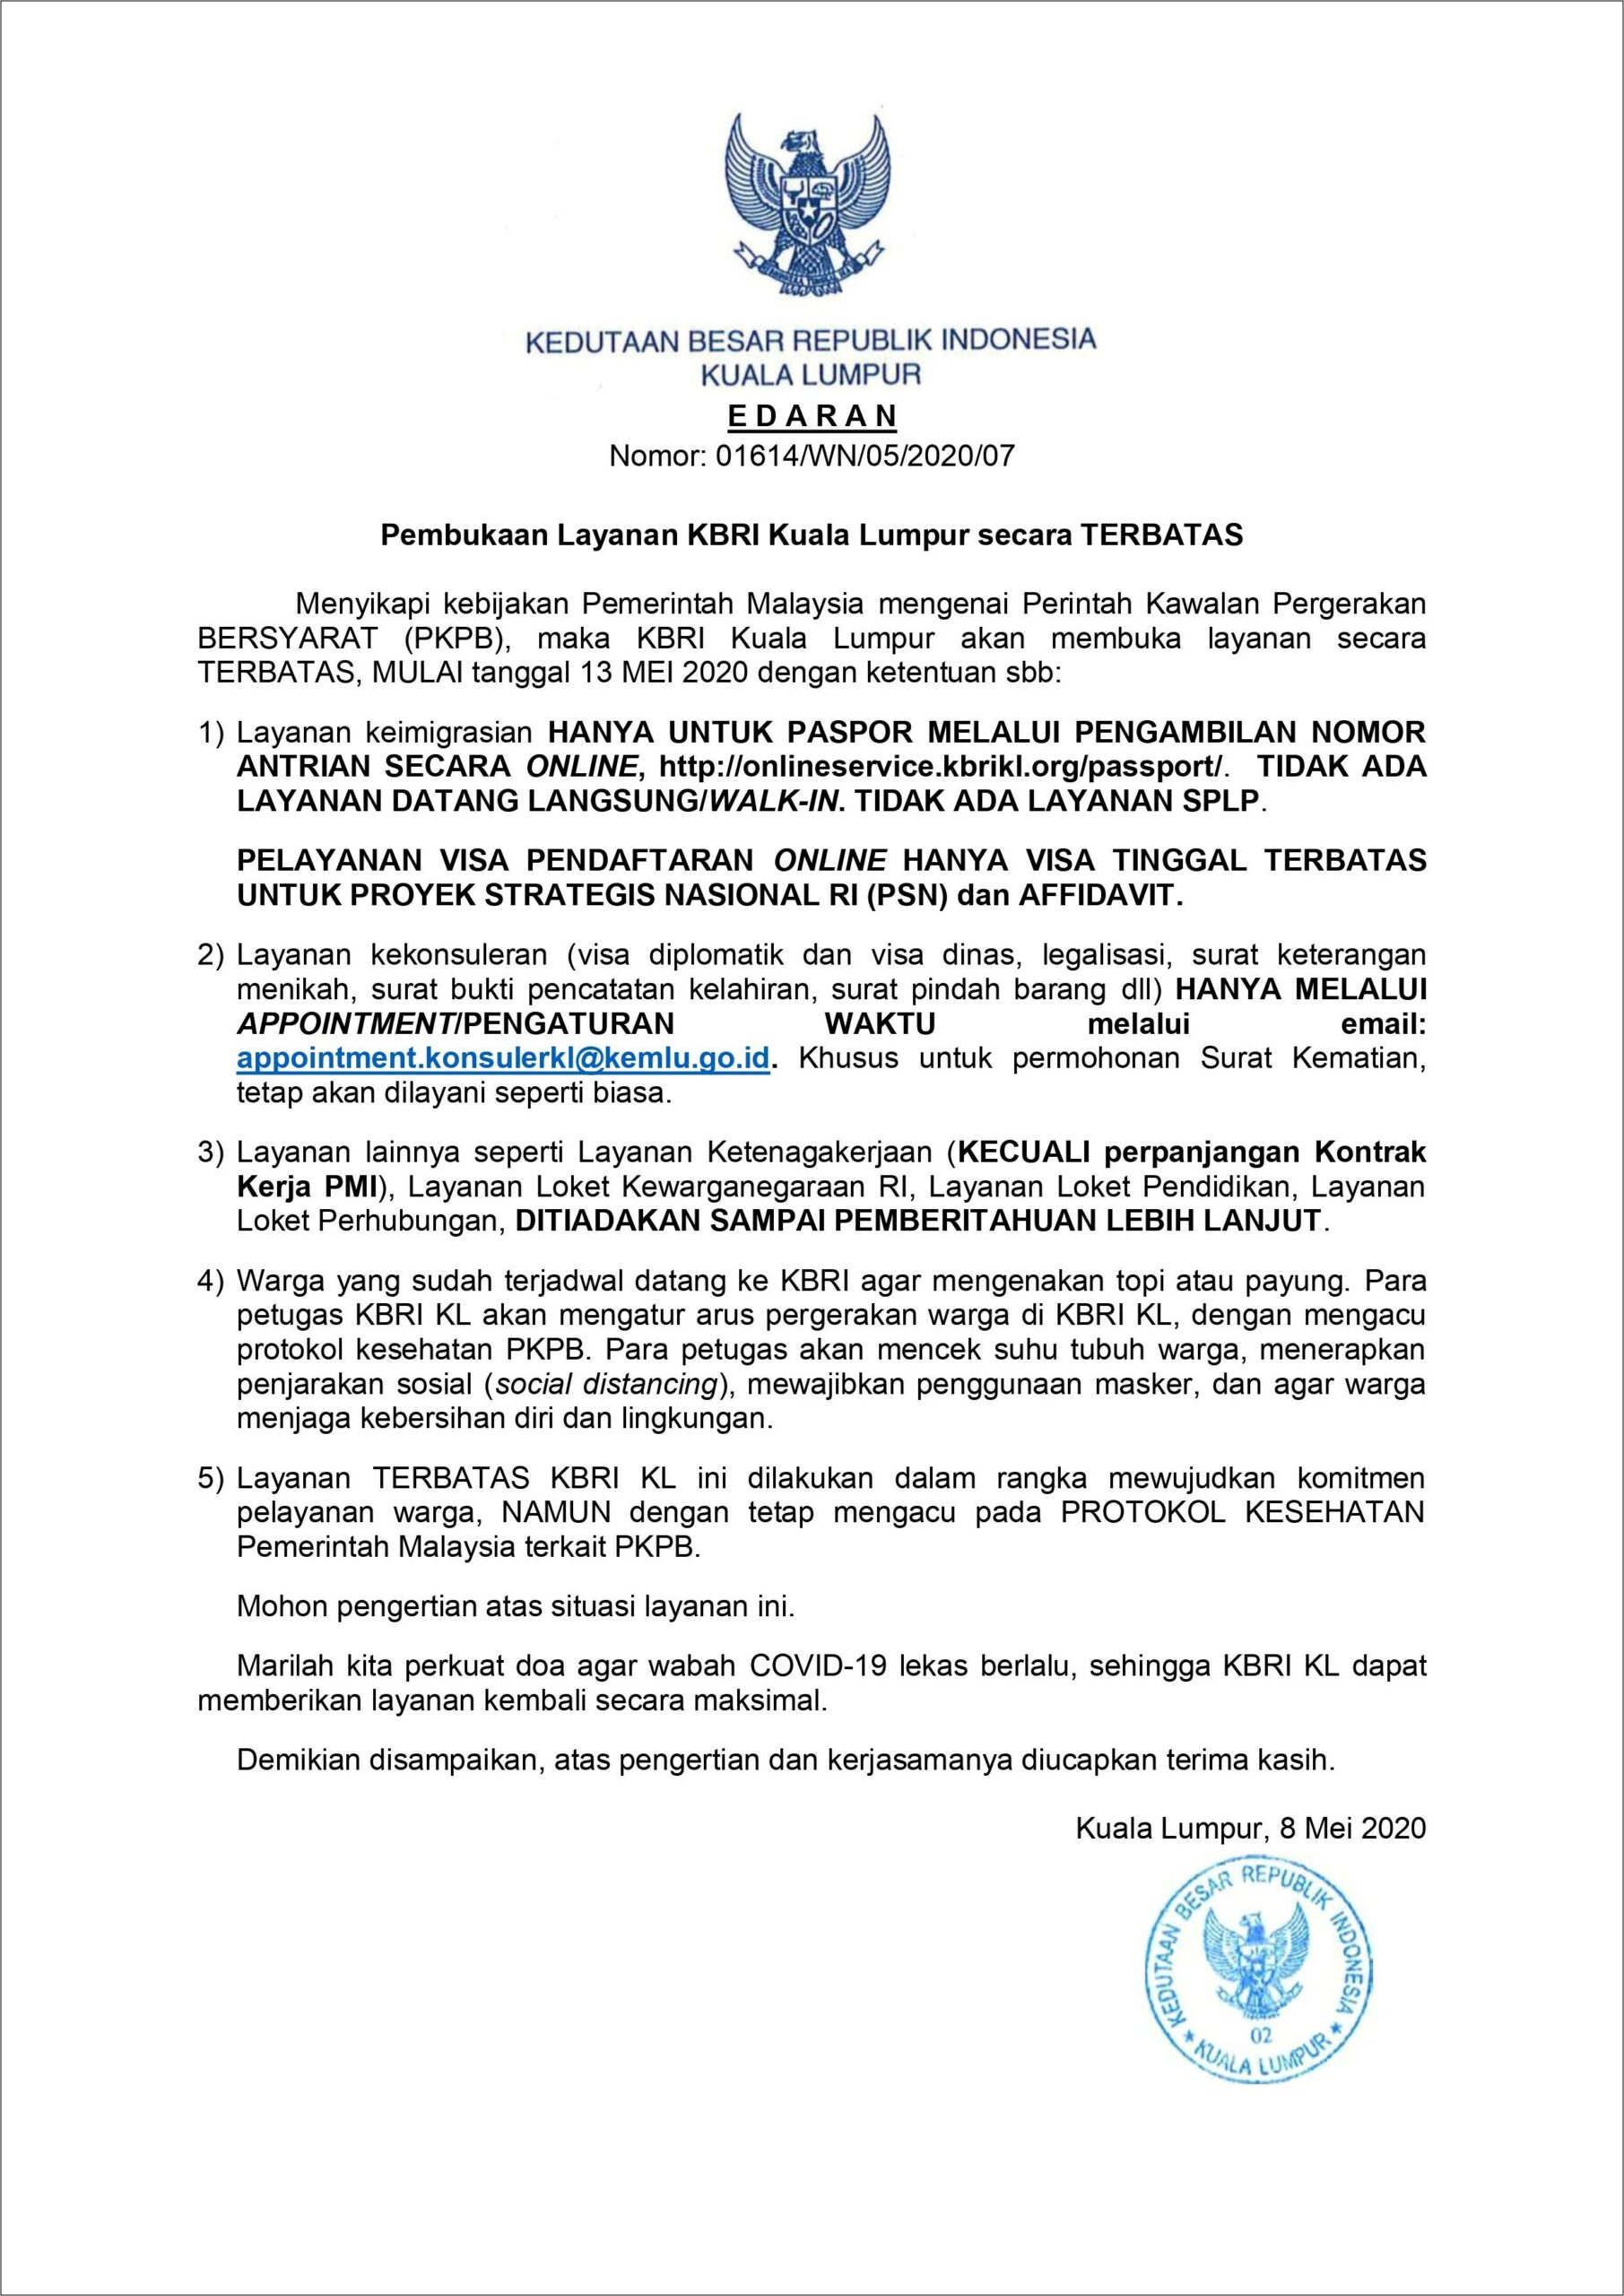 Contoh Surat Permohonan Visa Tinggal Terbatas Ke Kedutaan Besar Indonesia